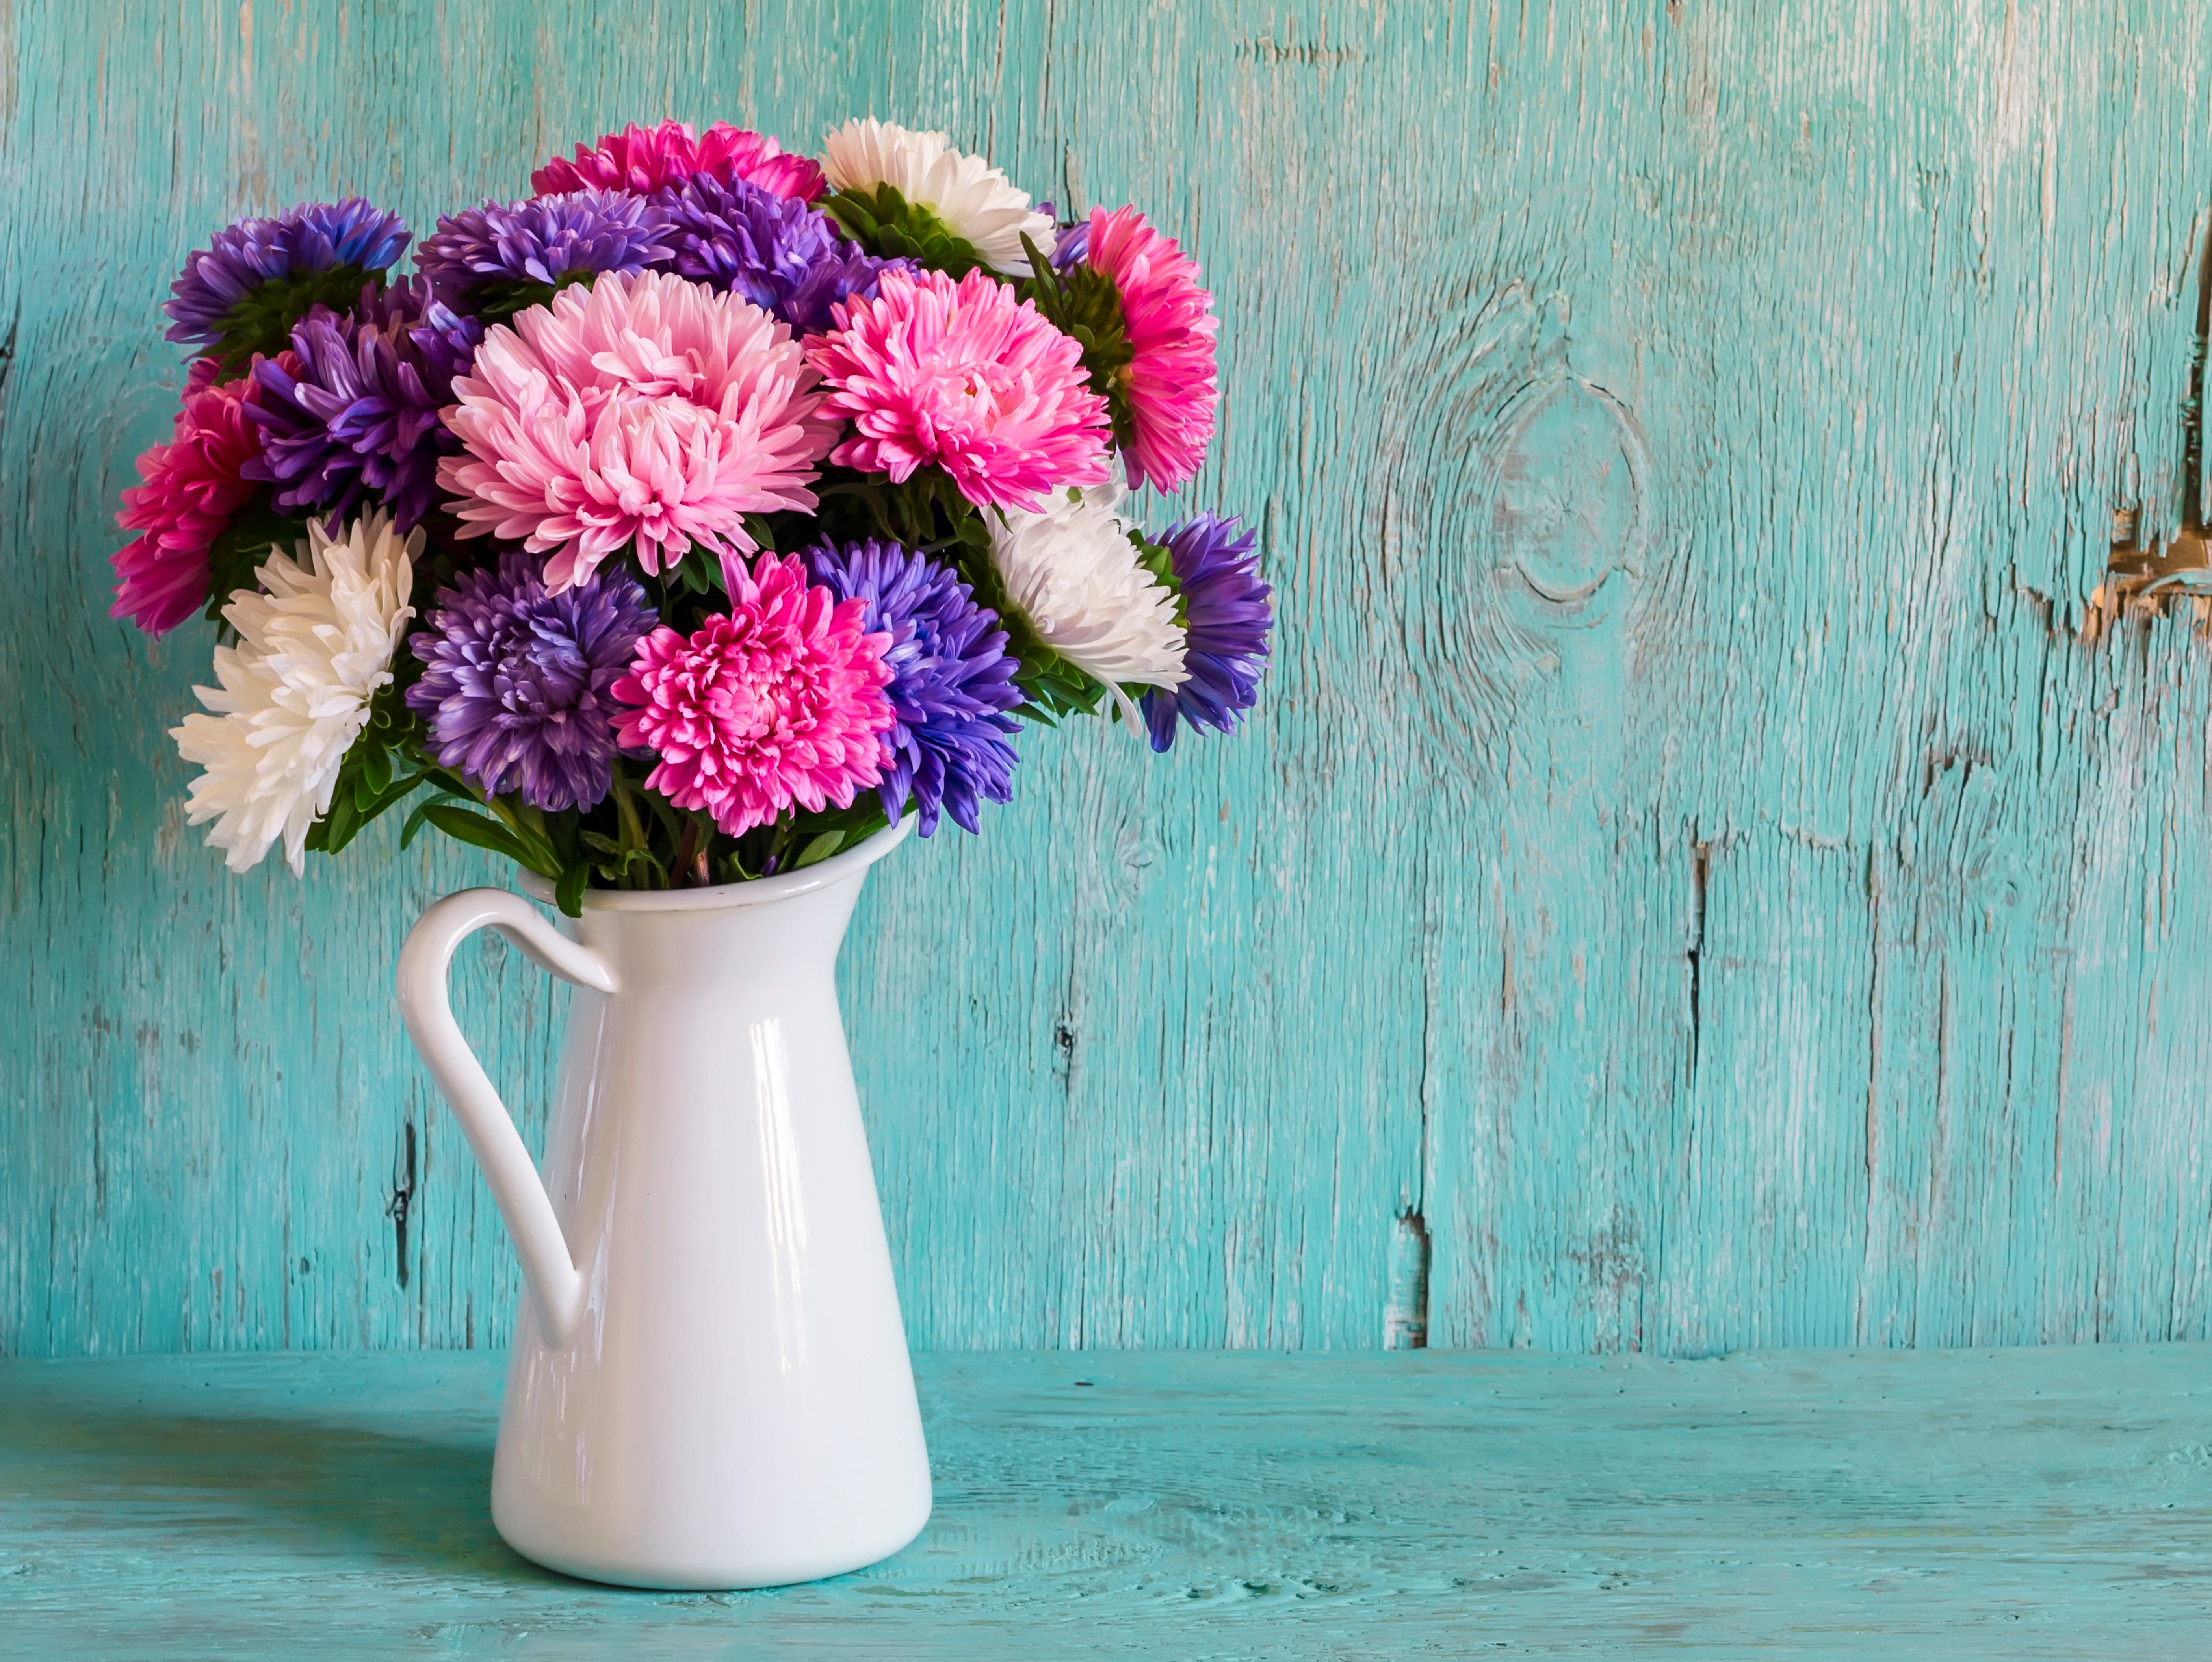 Bouquet Colorful Daisy Flower Pitcher Still Life Vase 5615x4220